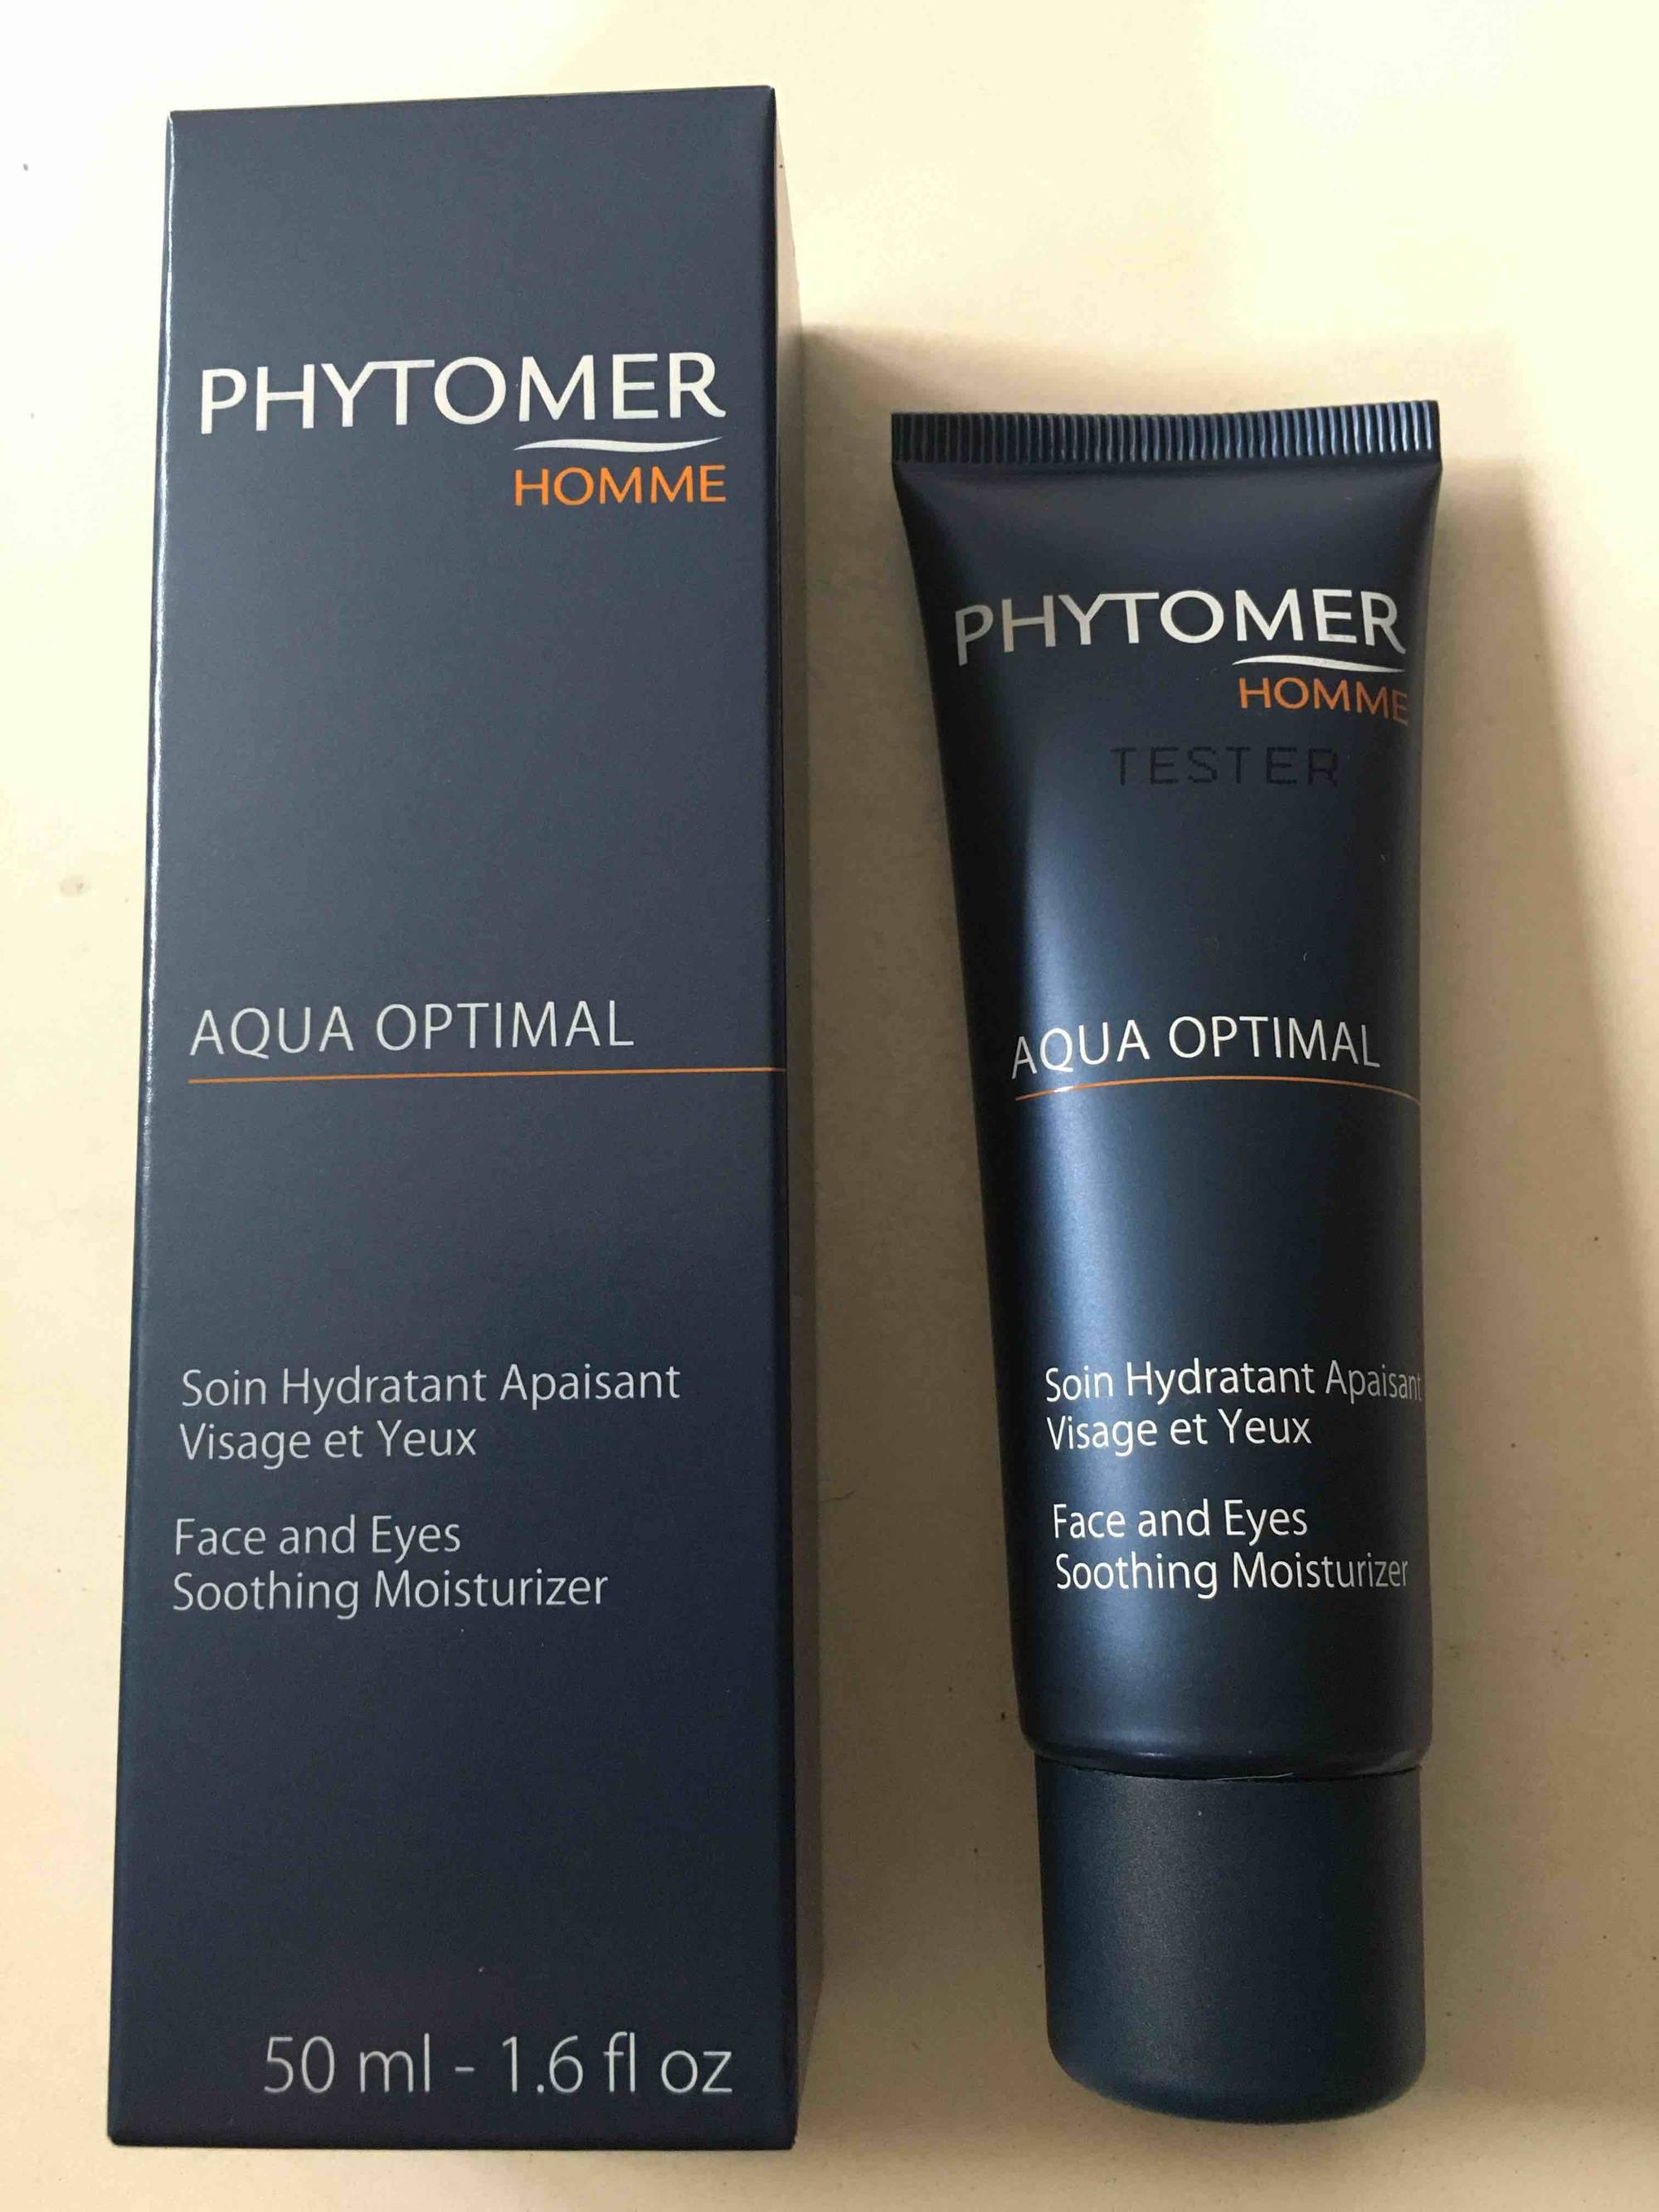 PHYTOMER - Homme Aqua optimal - Soin hydratant apaisant